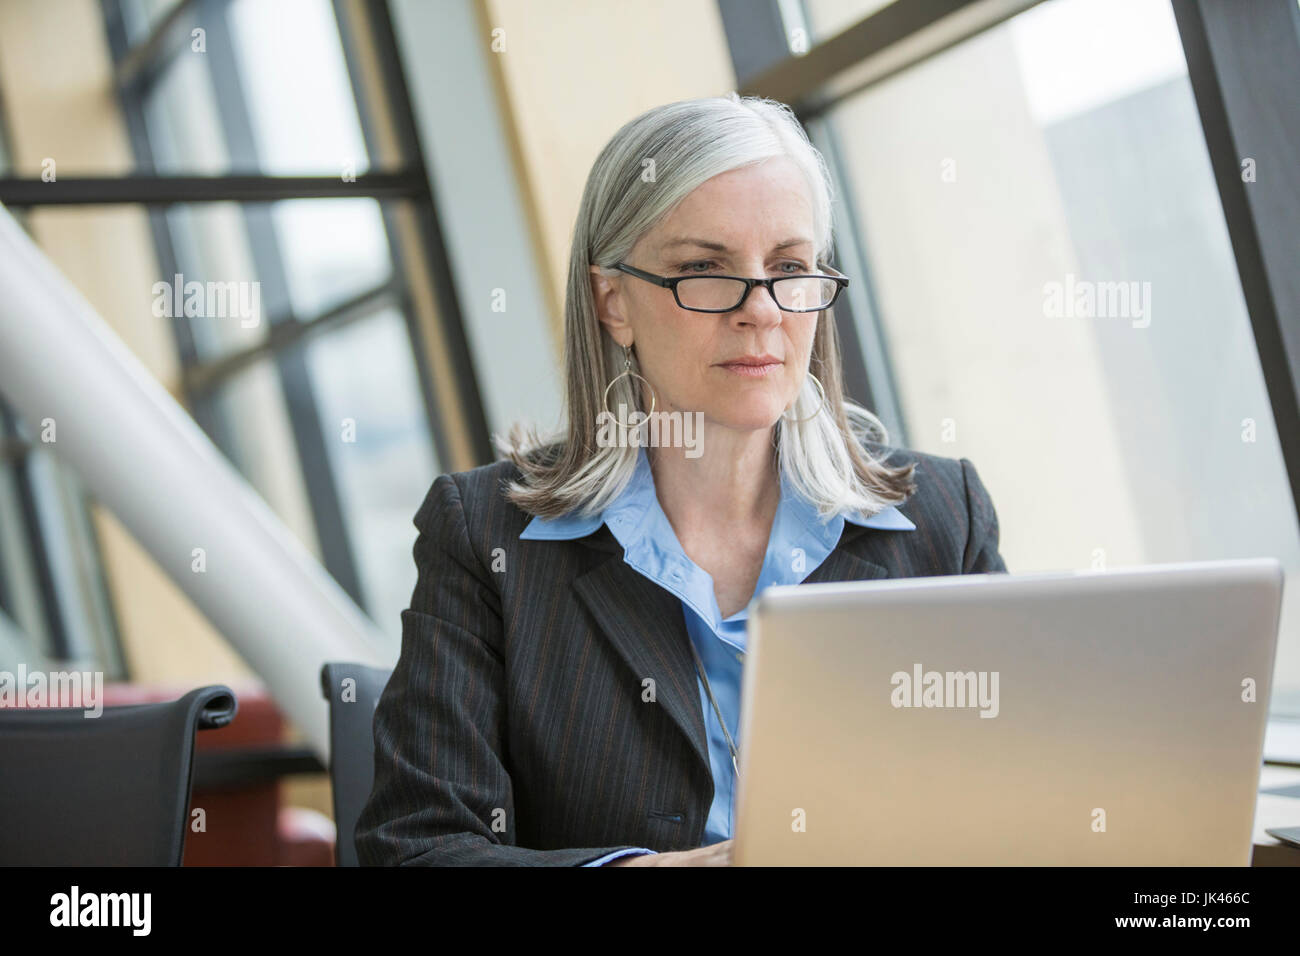 Serious Caucasian businesswoman using laptop Stock Photo